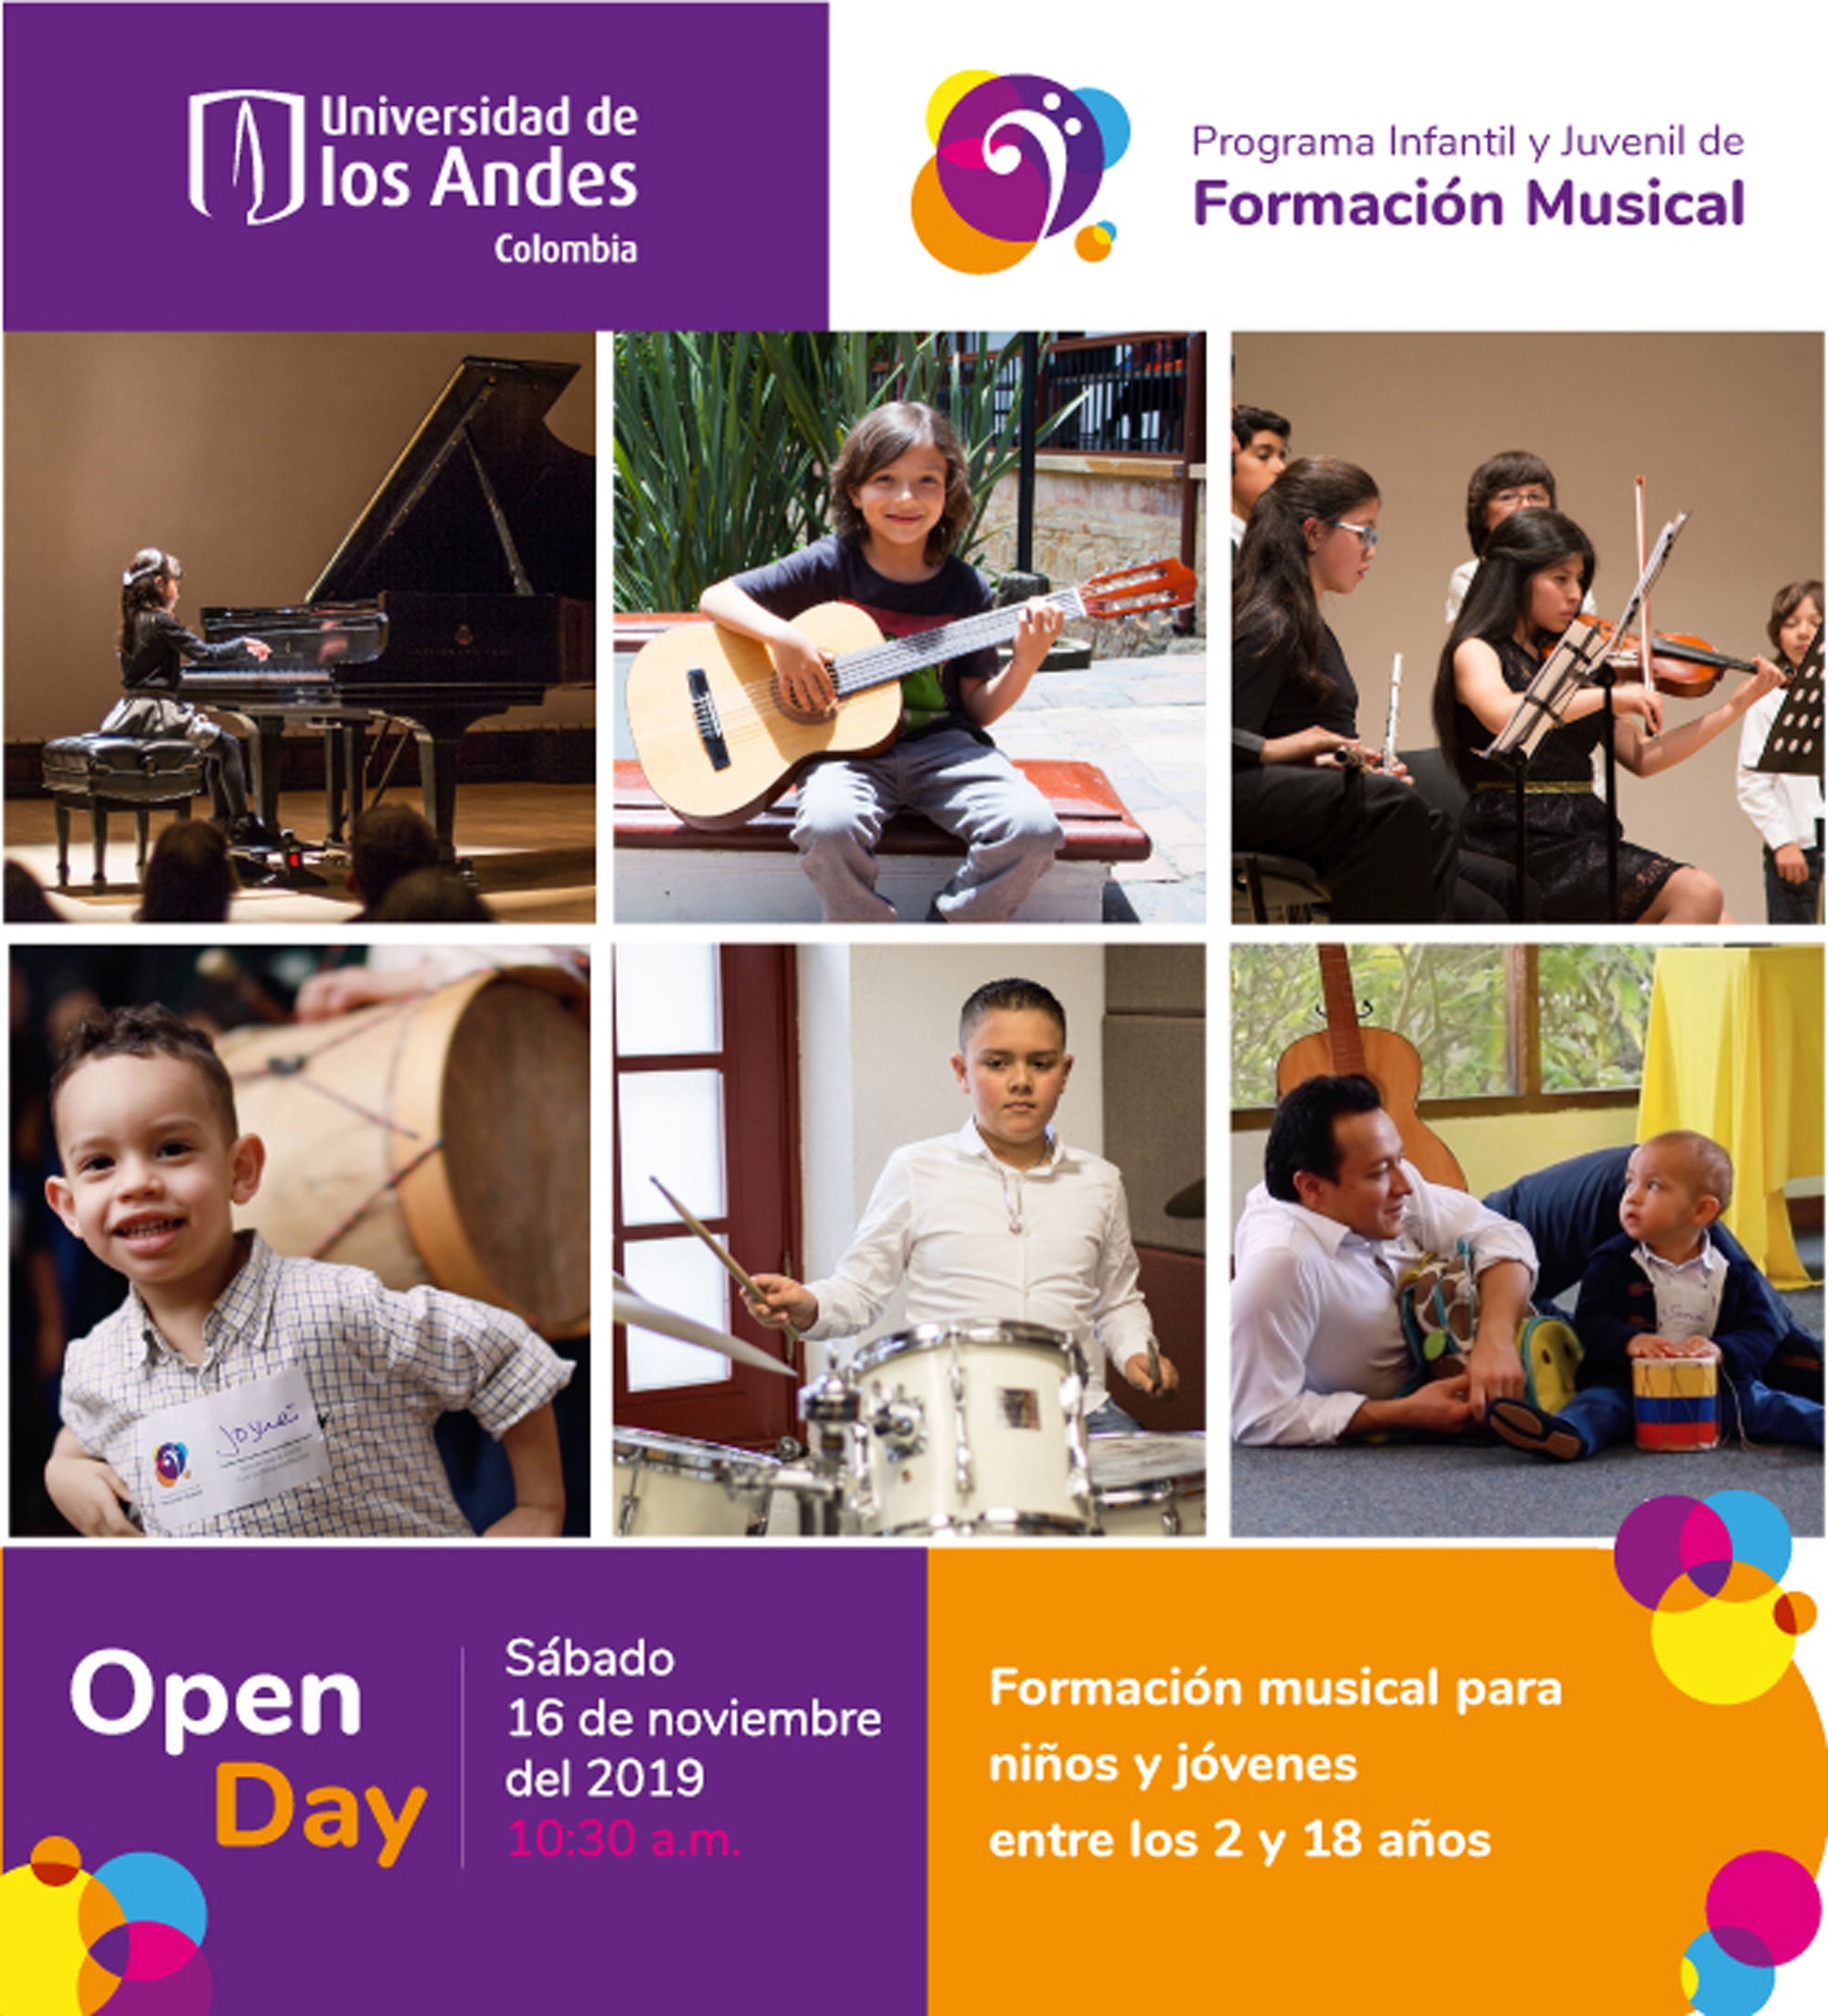 Open Day Programa infantil y juvenil de música